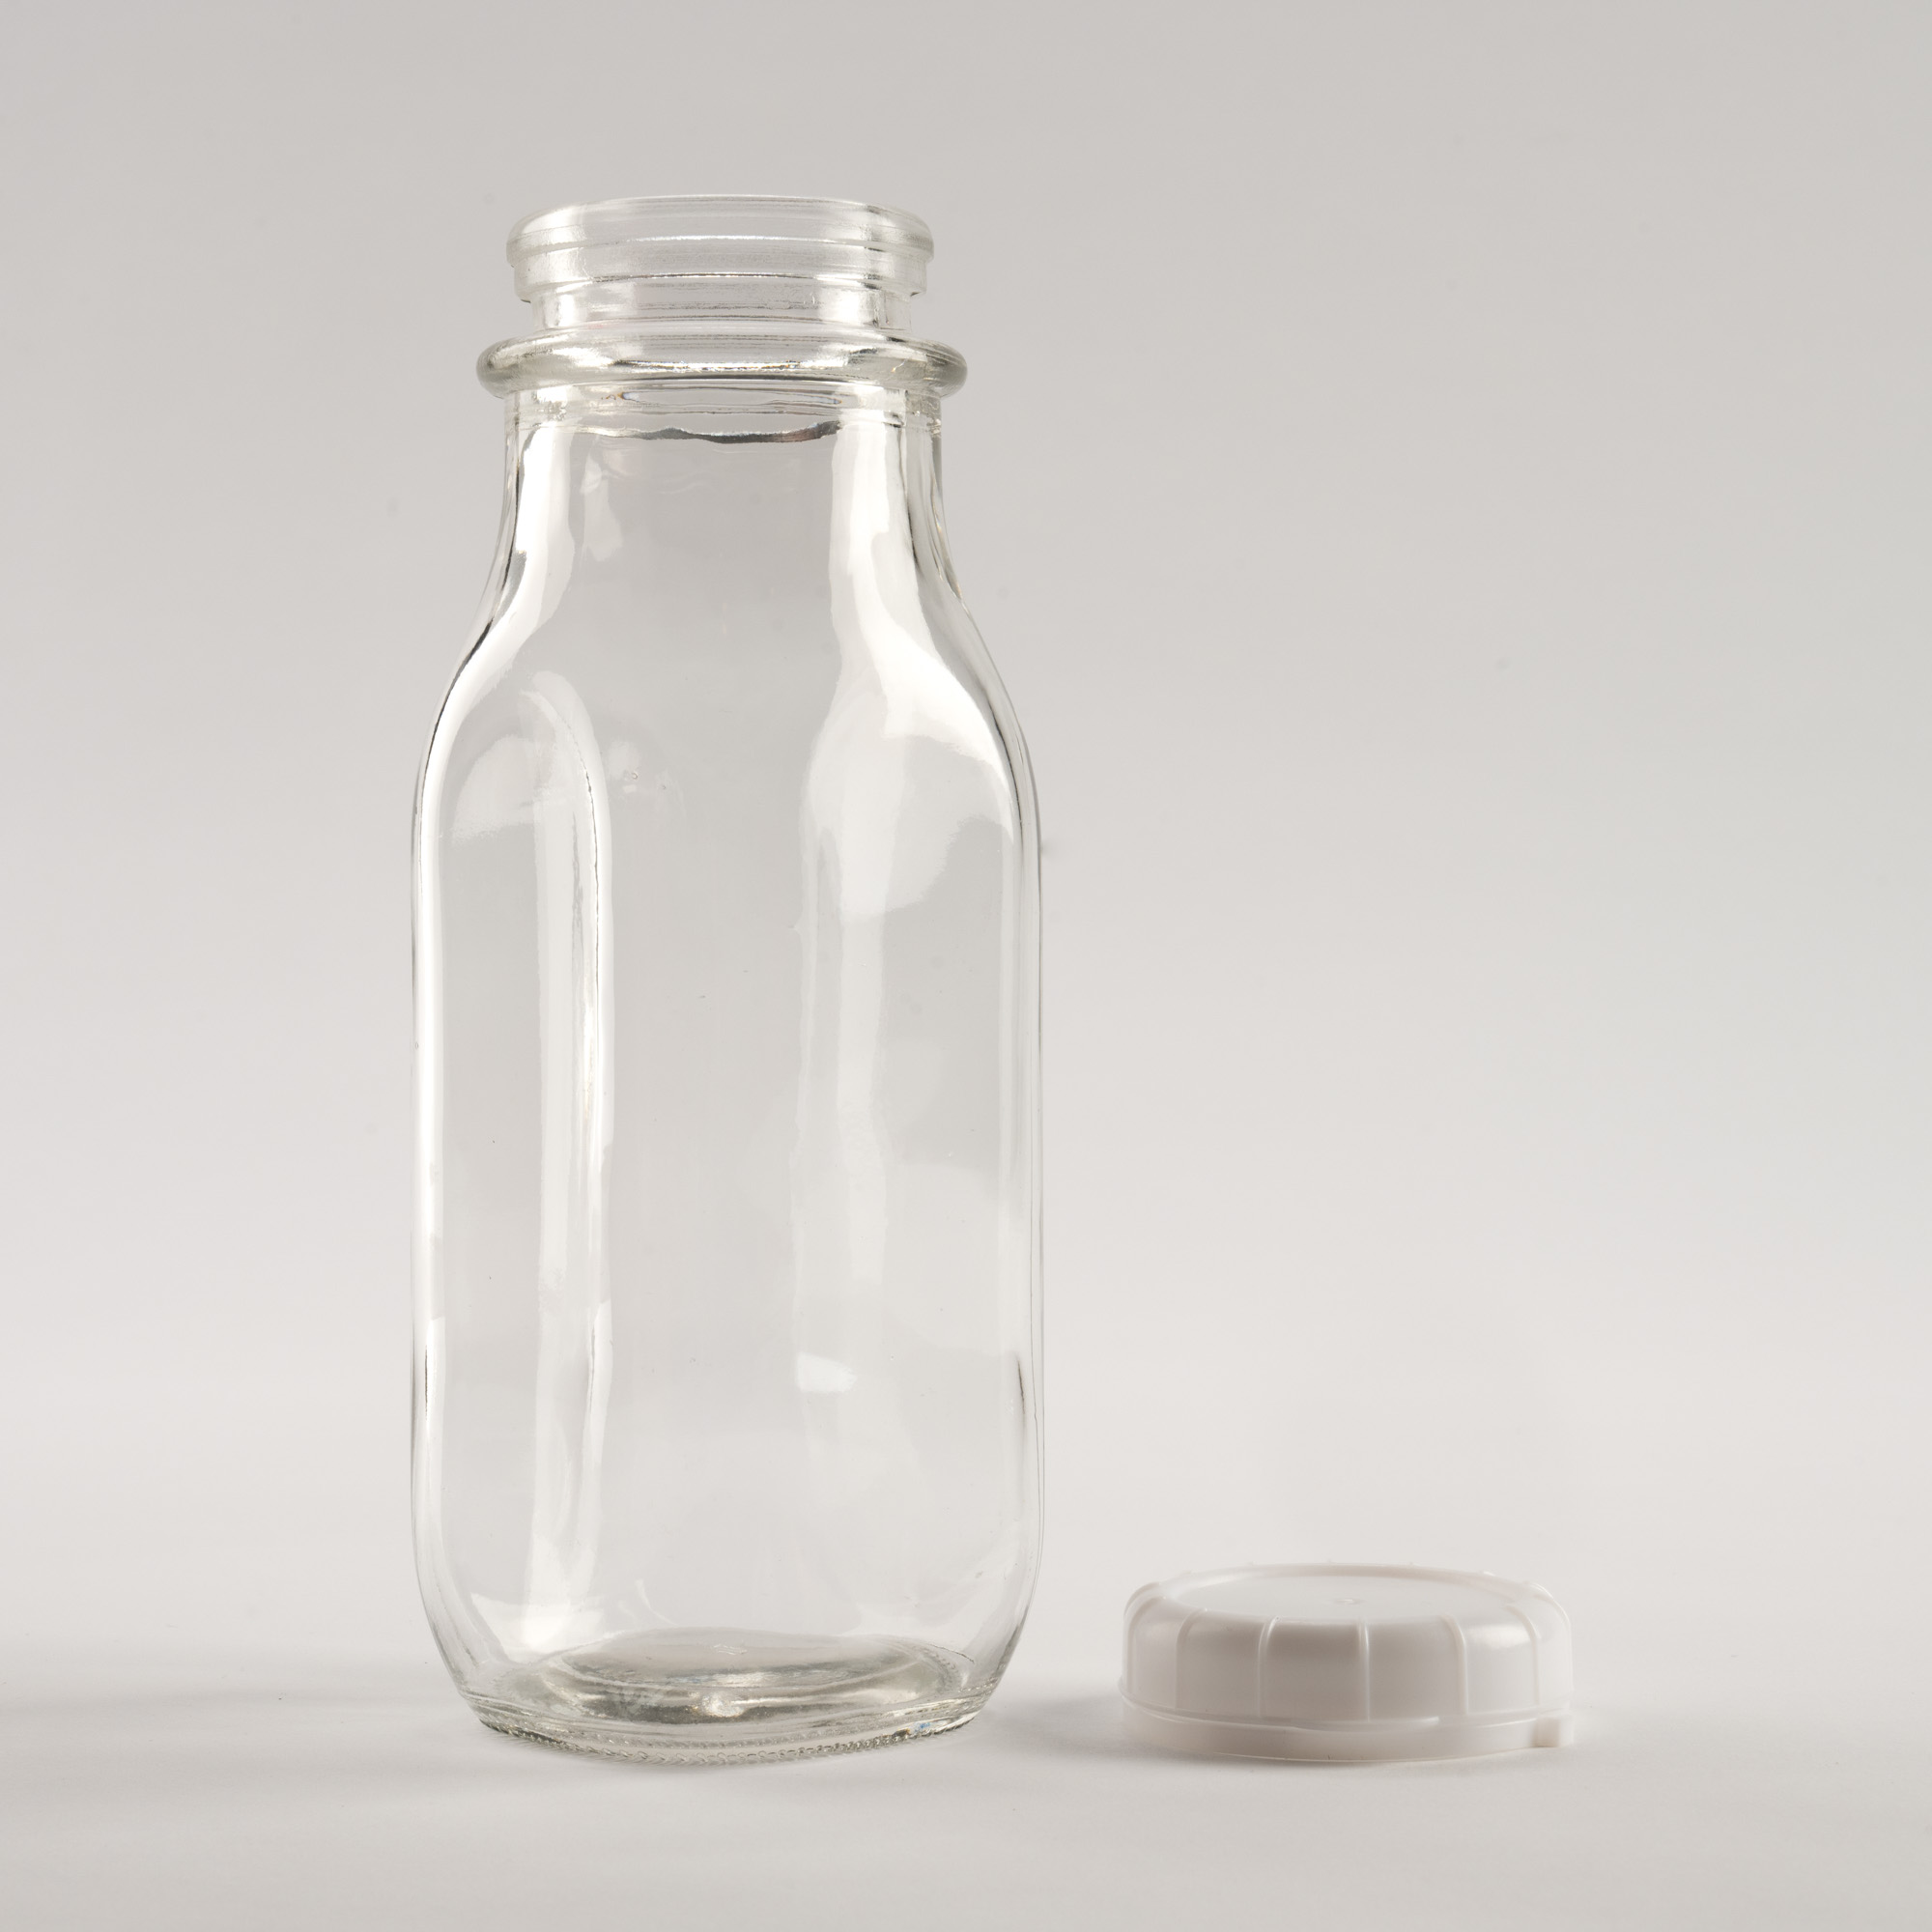 12 oz Glass Bottle - 1,920 qty pallet